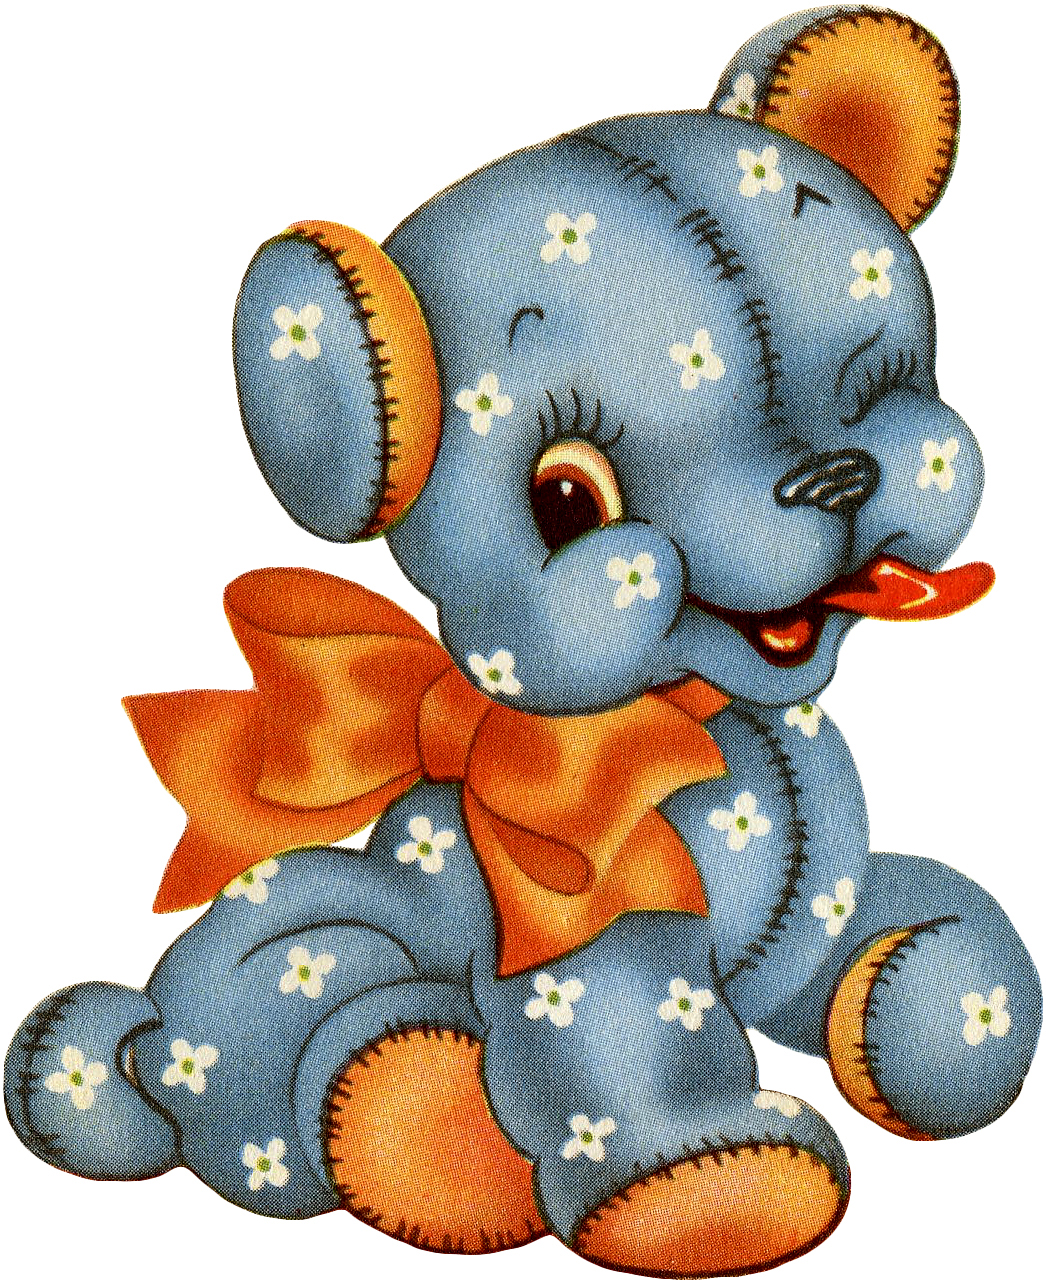 2 Retro Kitsch Calico Stuffed Animal Illustrations - Blue! - The Graphics Fairy1046 x 1288